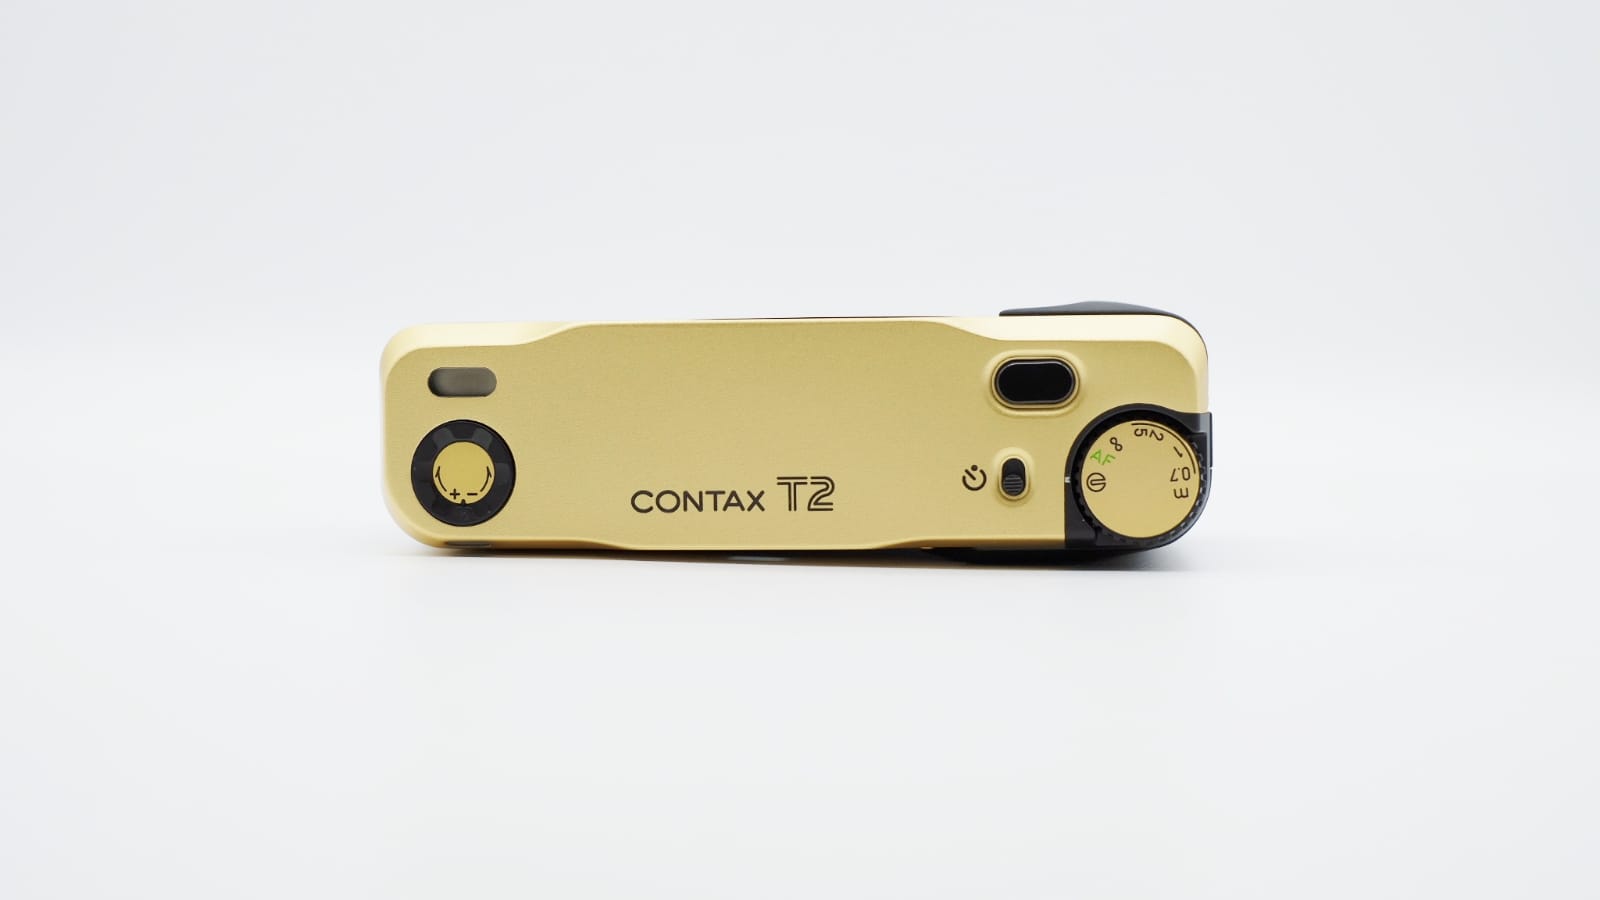 CONTAX T2 60 年限量版